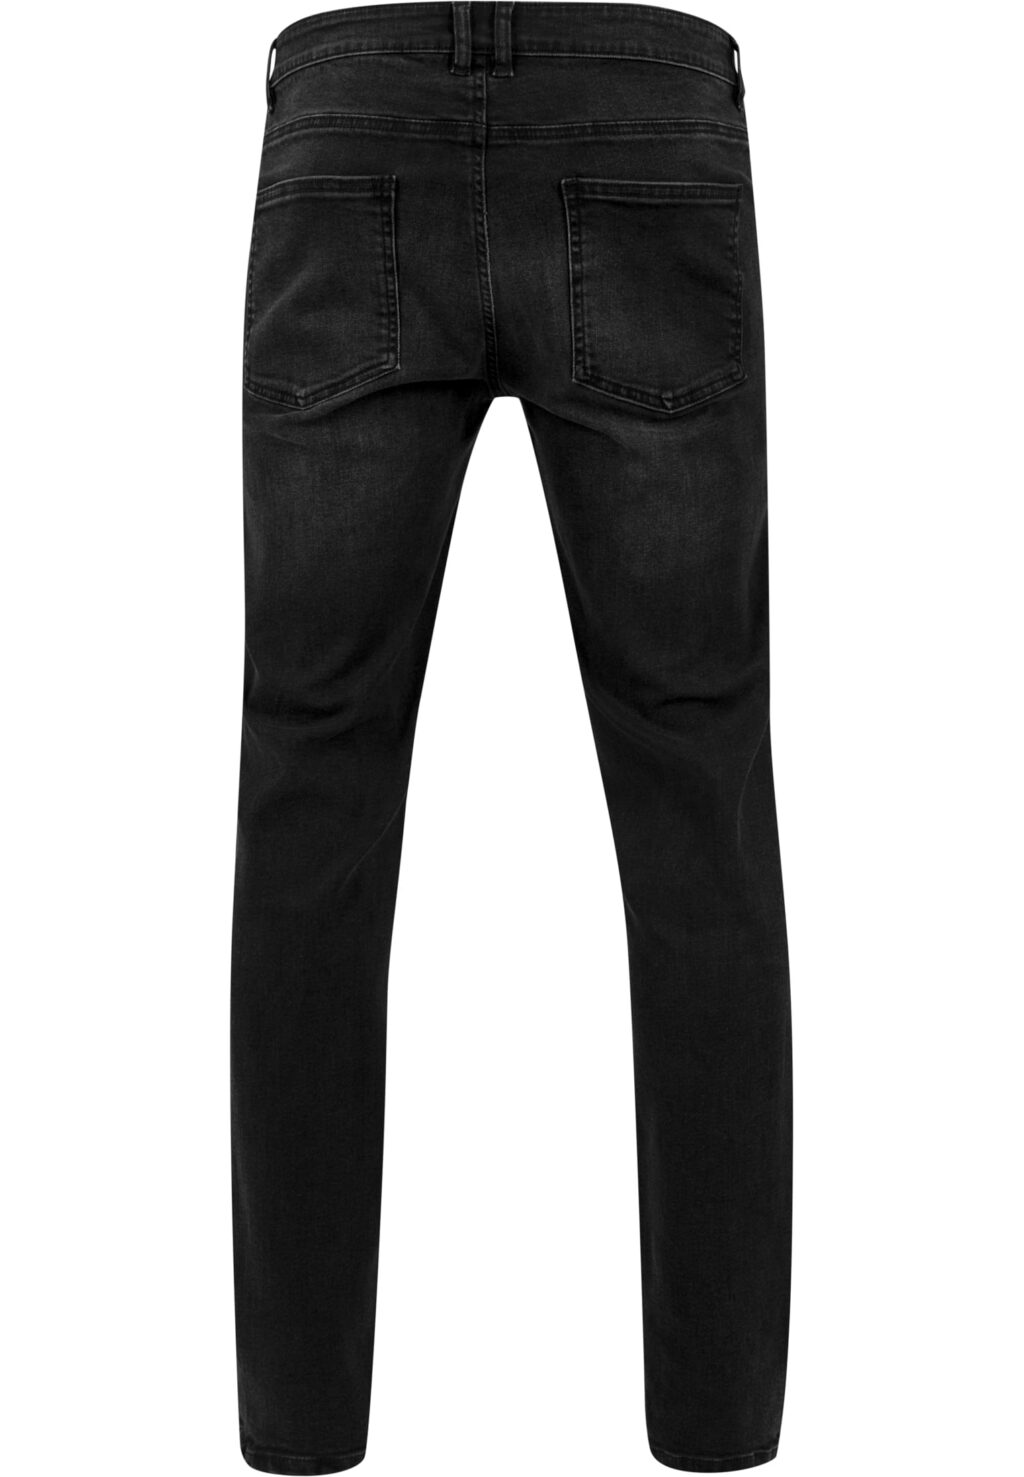 Urban Classics Stretch Denim Pants black washed TB1437